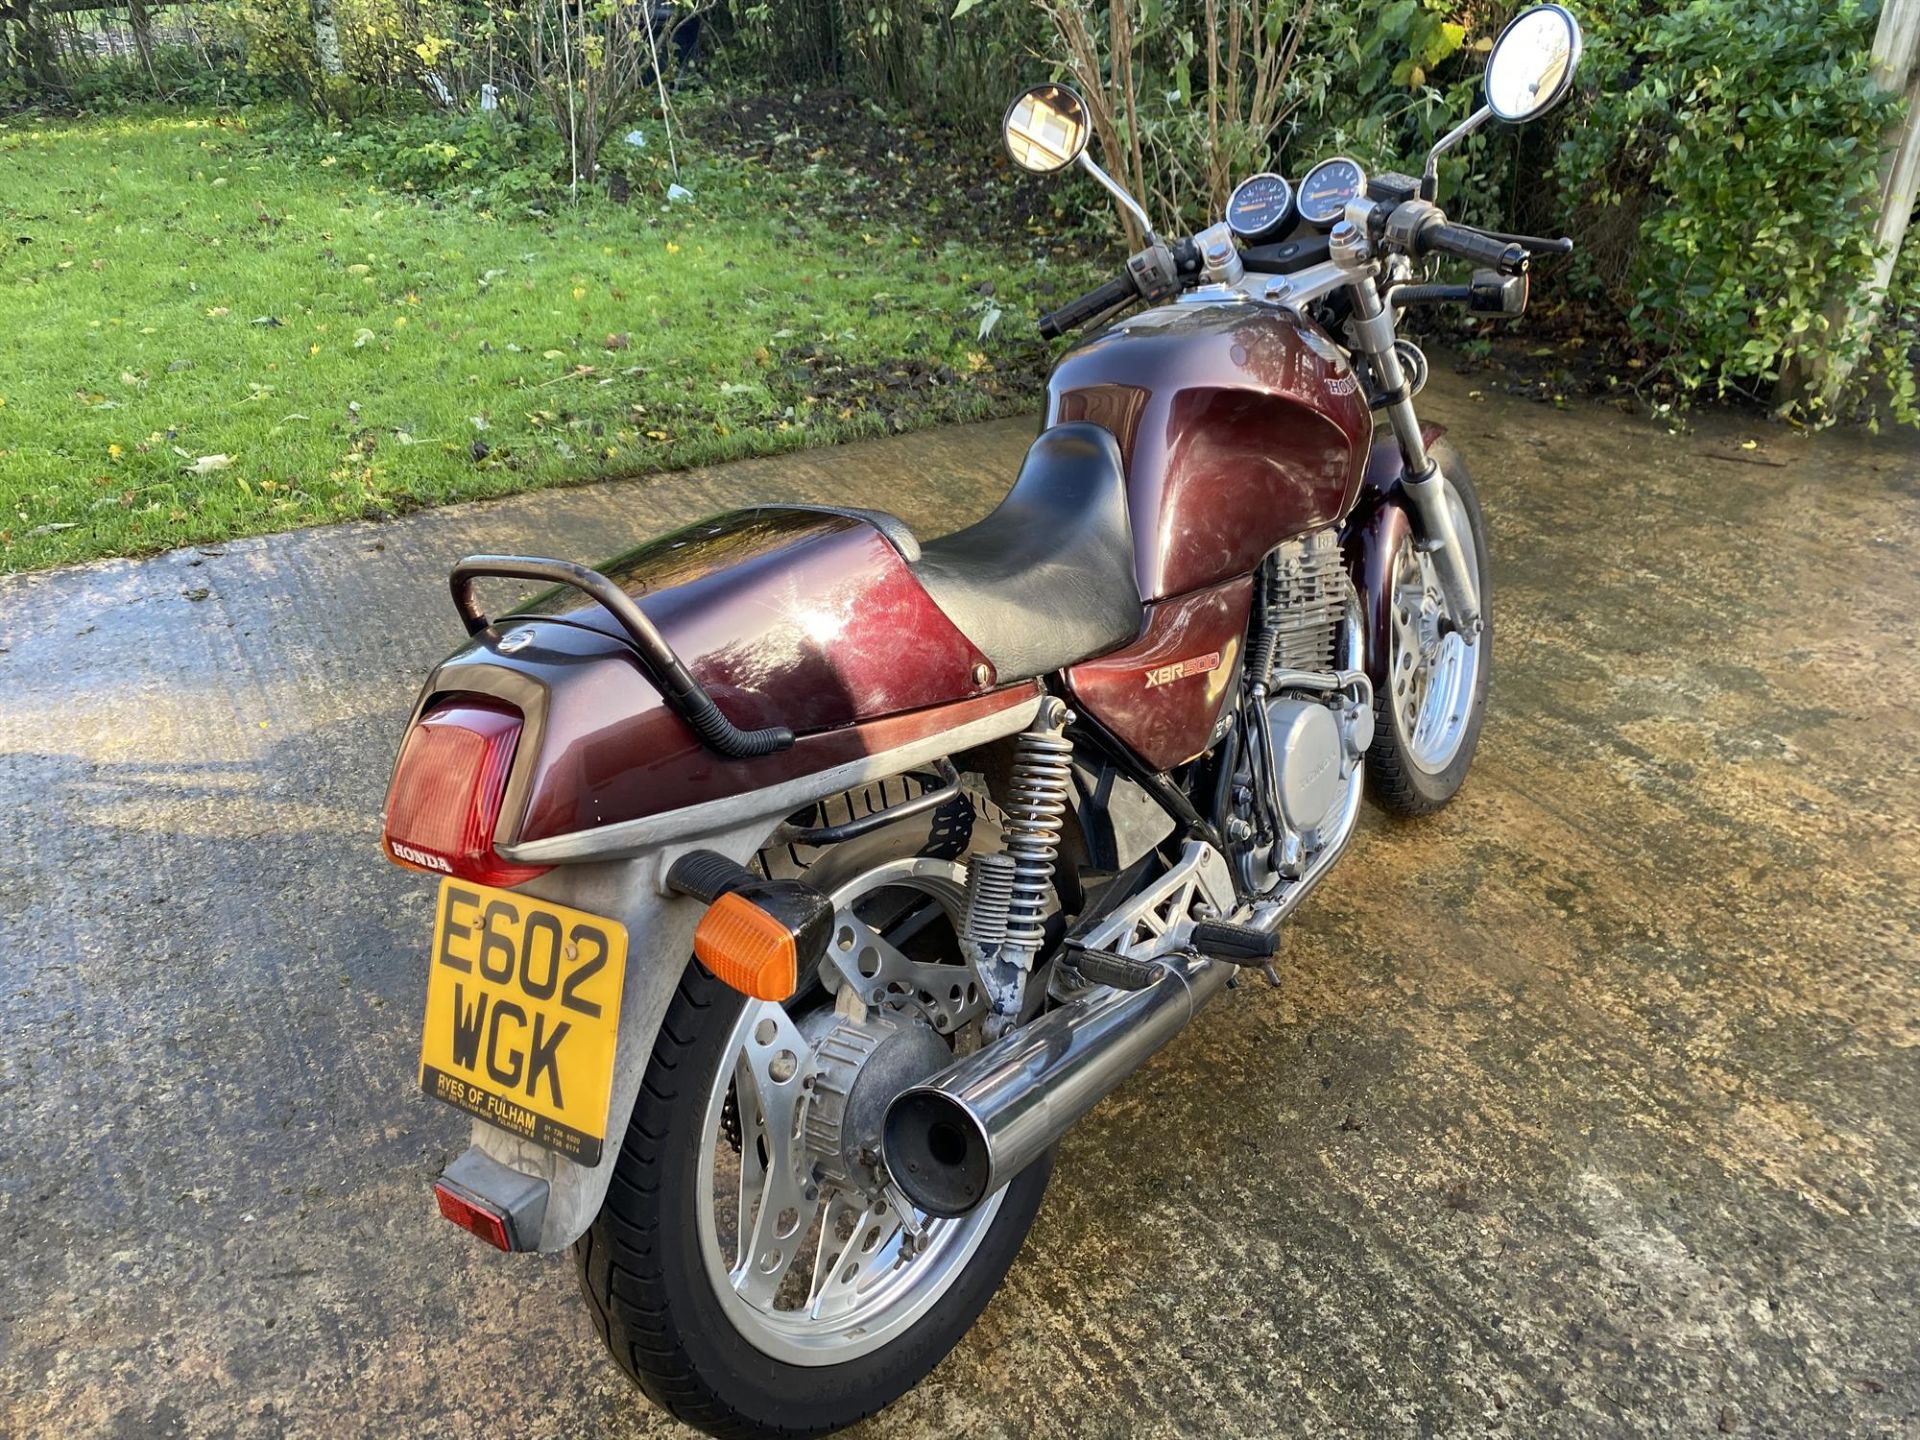 1987 Honda XBR 500 single cylinder motorbike in maroon colour. Registration E602 WGK, mileage 45, - Image 4 of 6